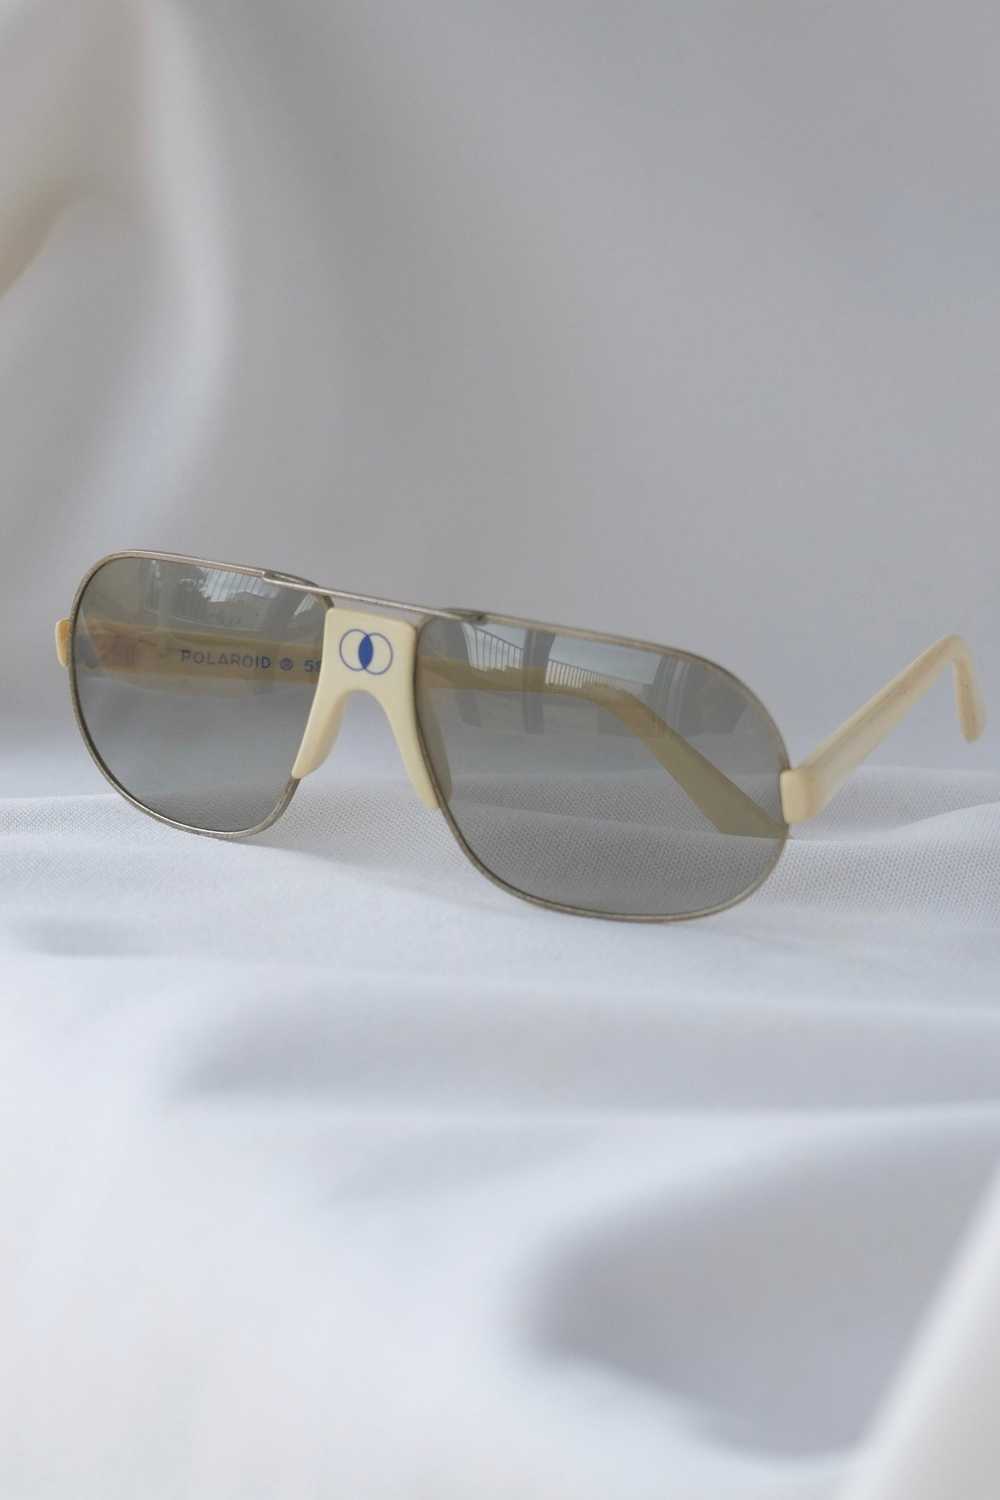 POLAROID 70's Rectangle Sports Sunglasses - image 2